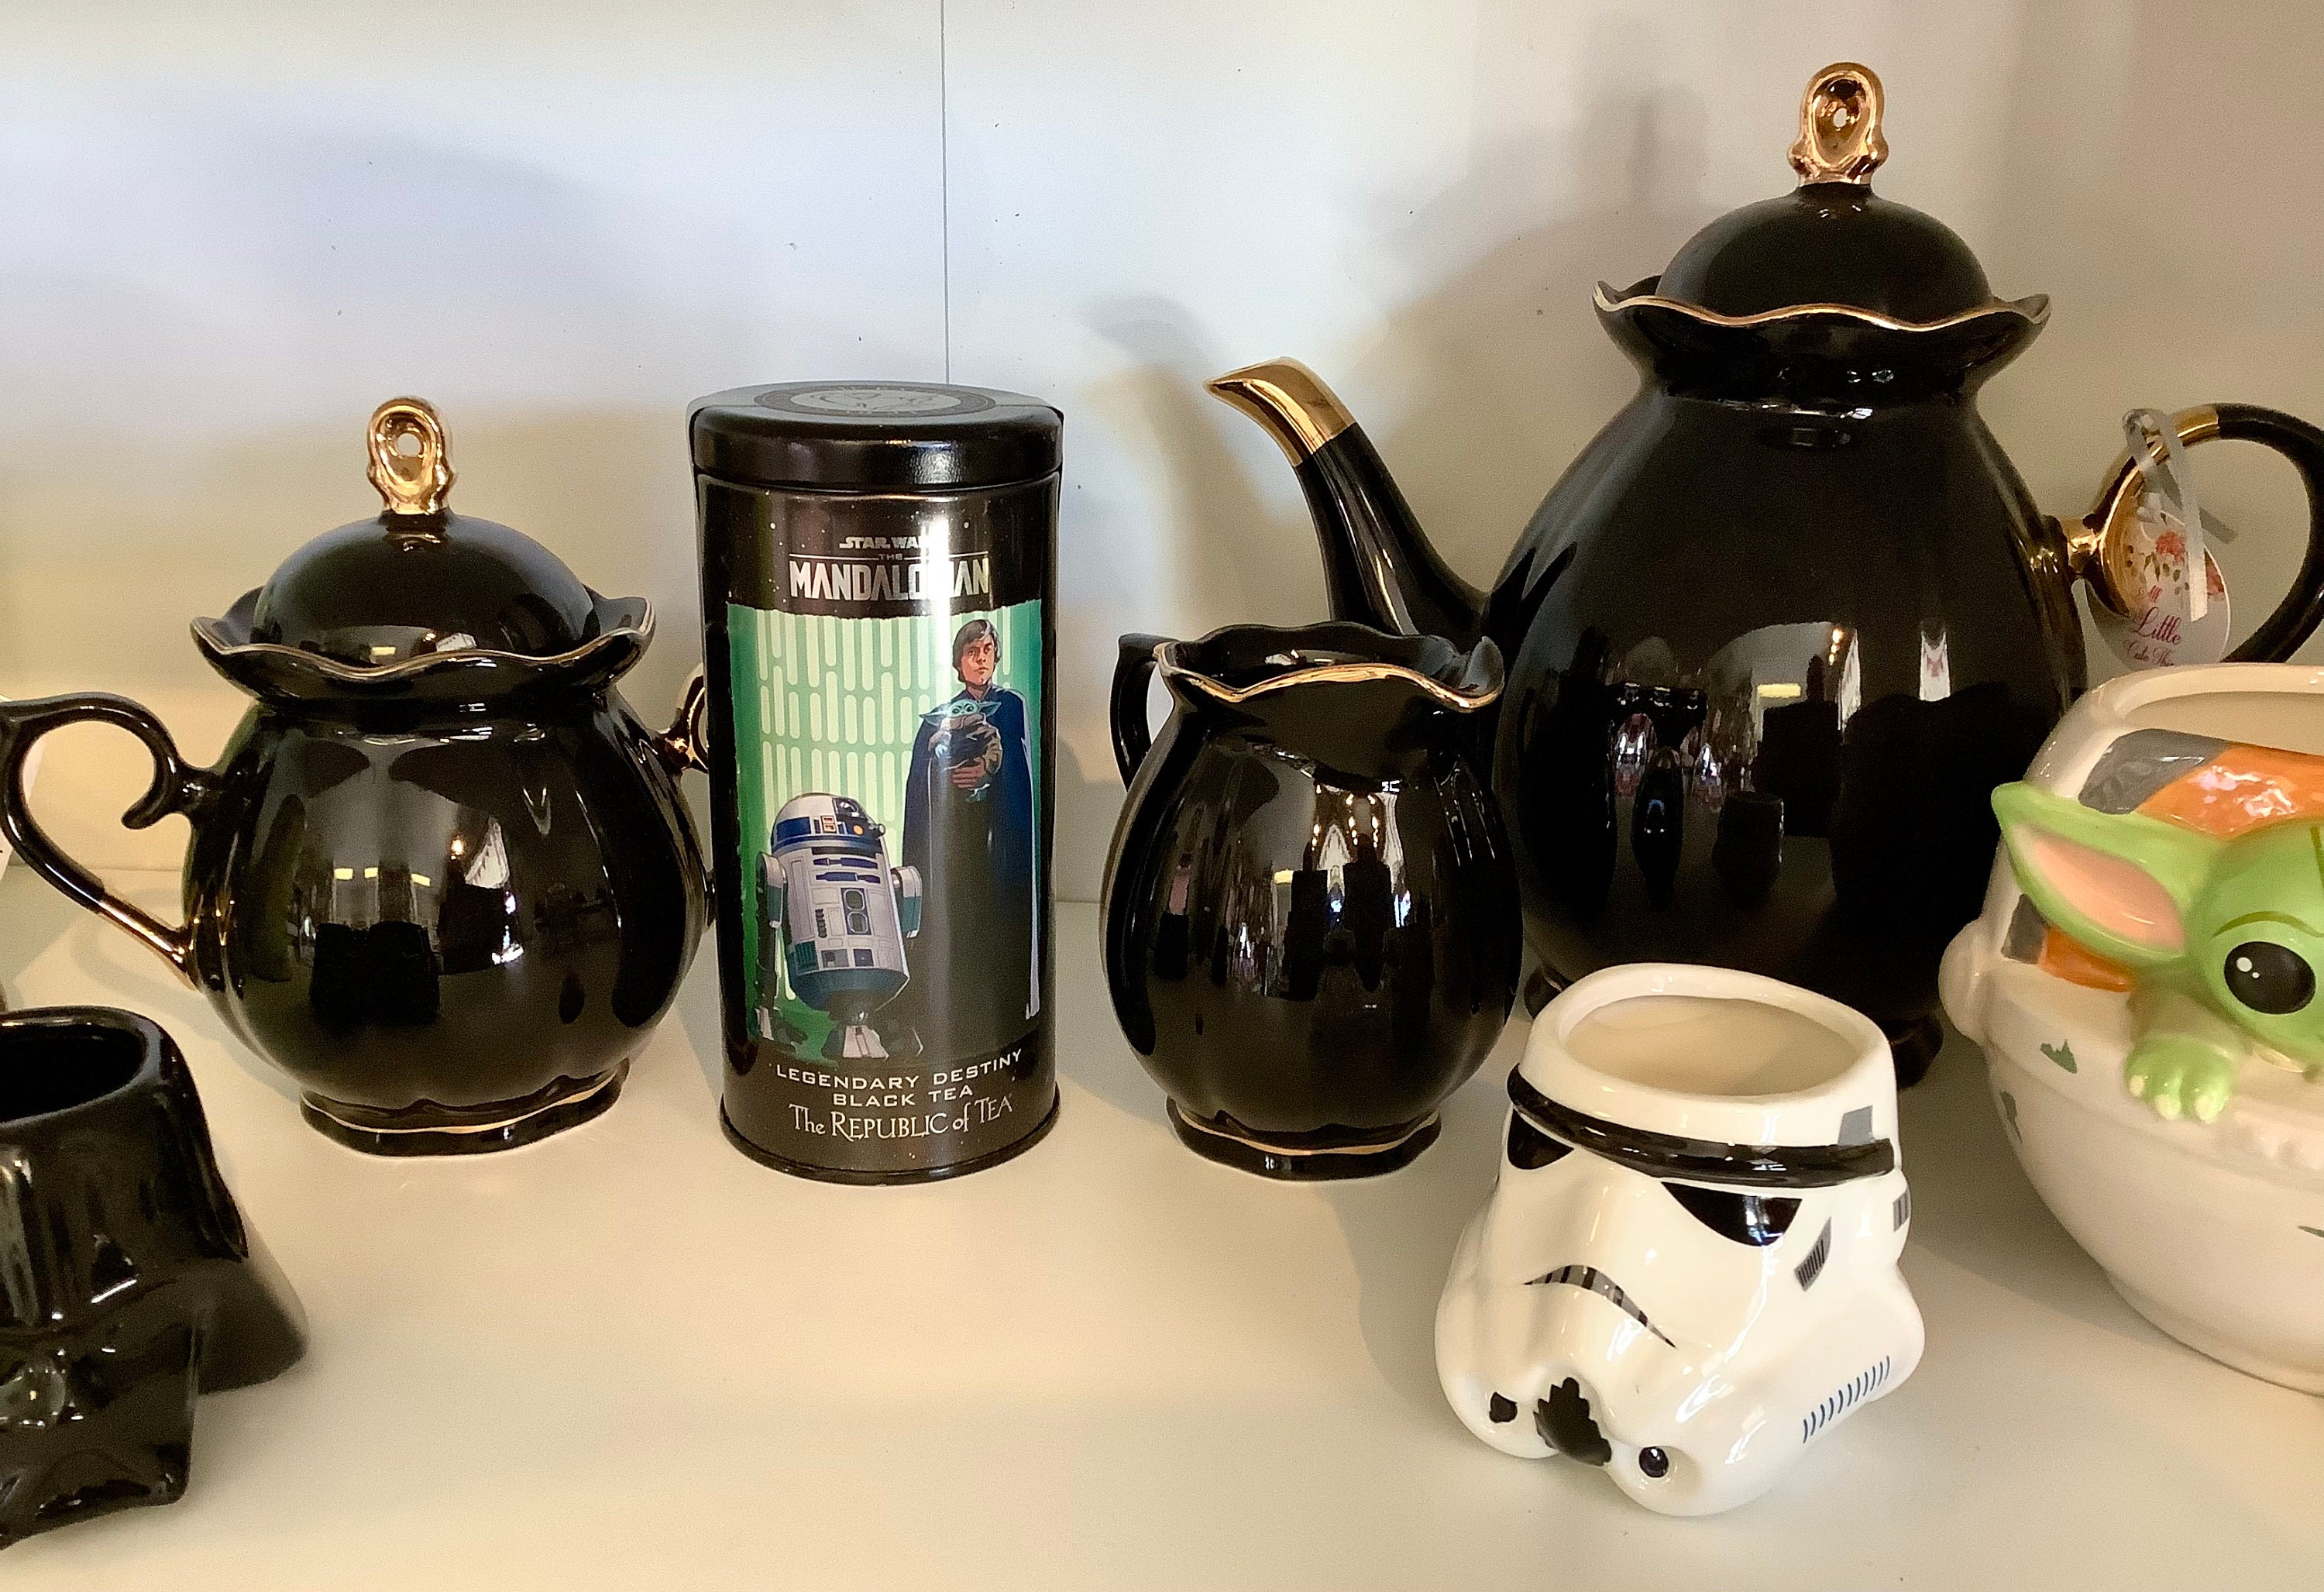 Star Wars Gift Black and Gold Porcelain Teapot Sugar Bowl Creamer, Limited  Edition Mandalorian Legendary Destiny Black Tea Canister